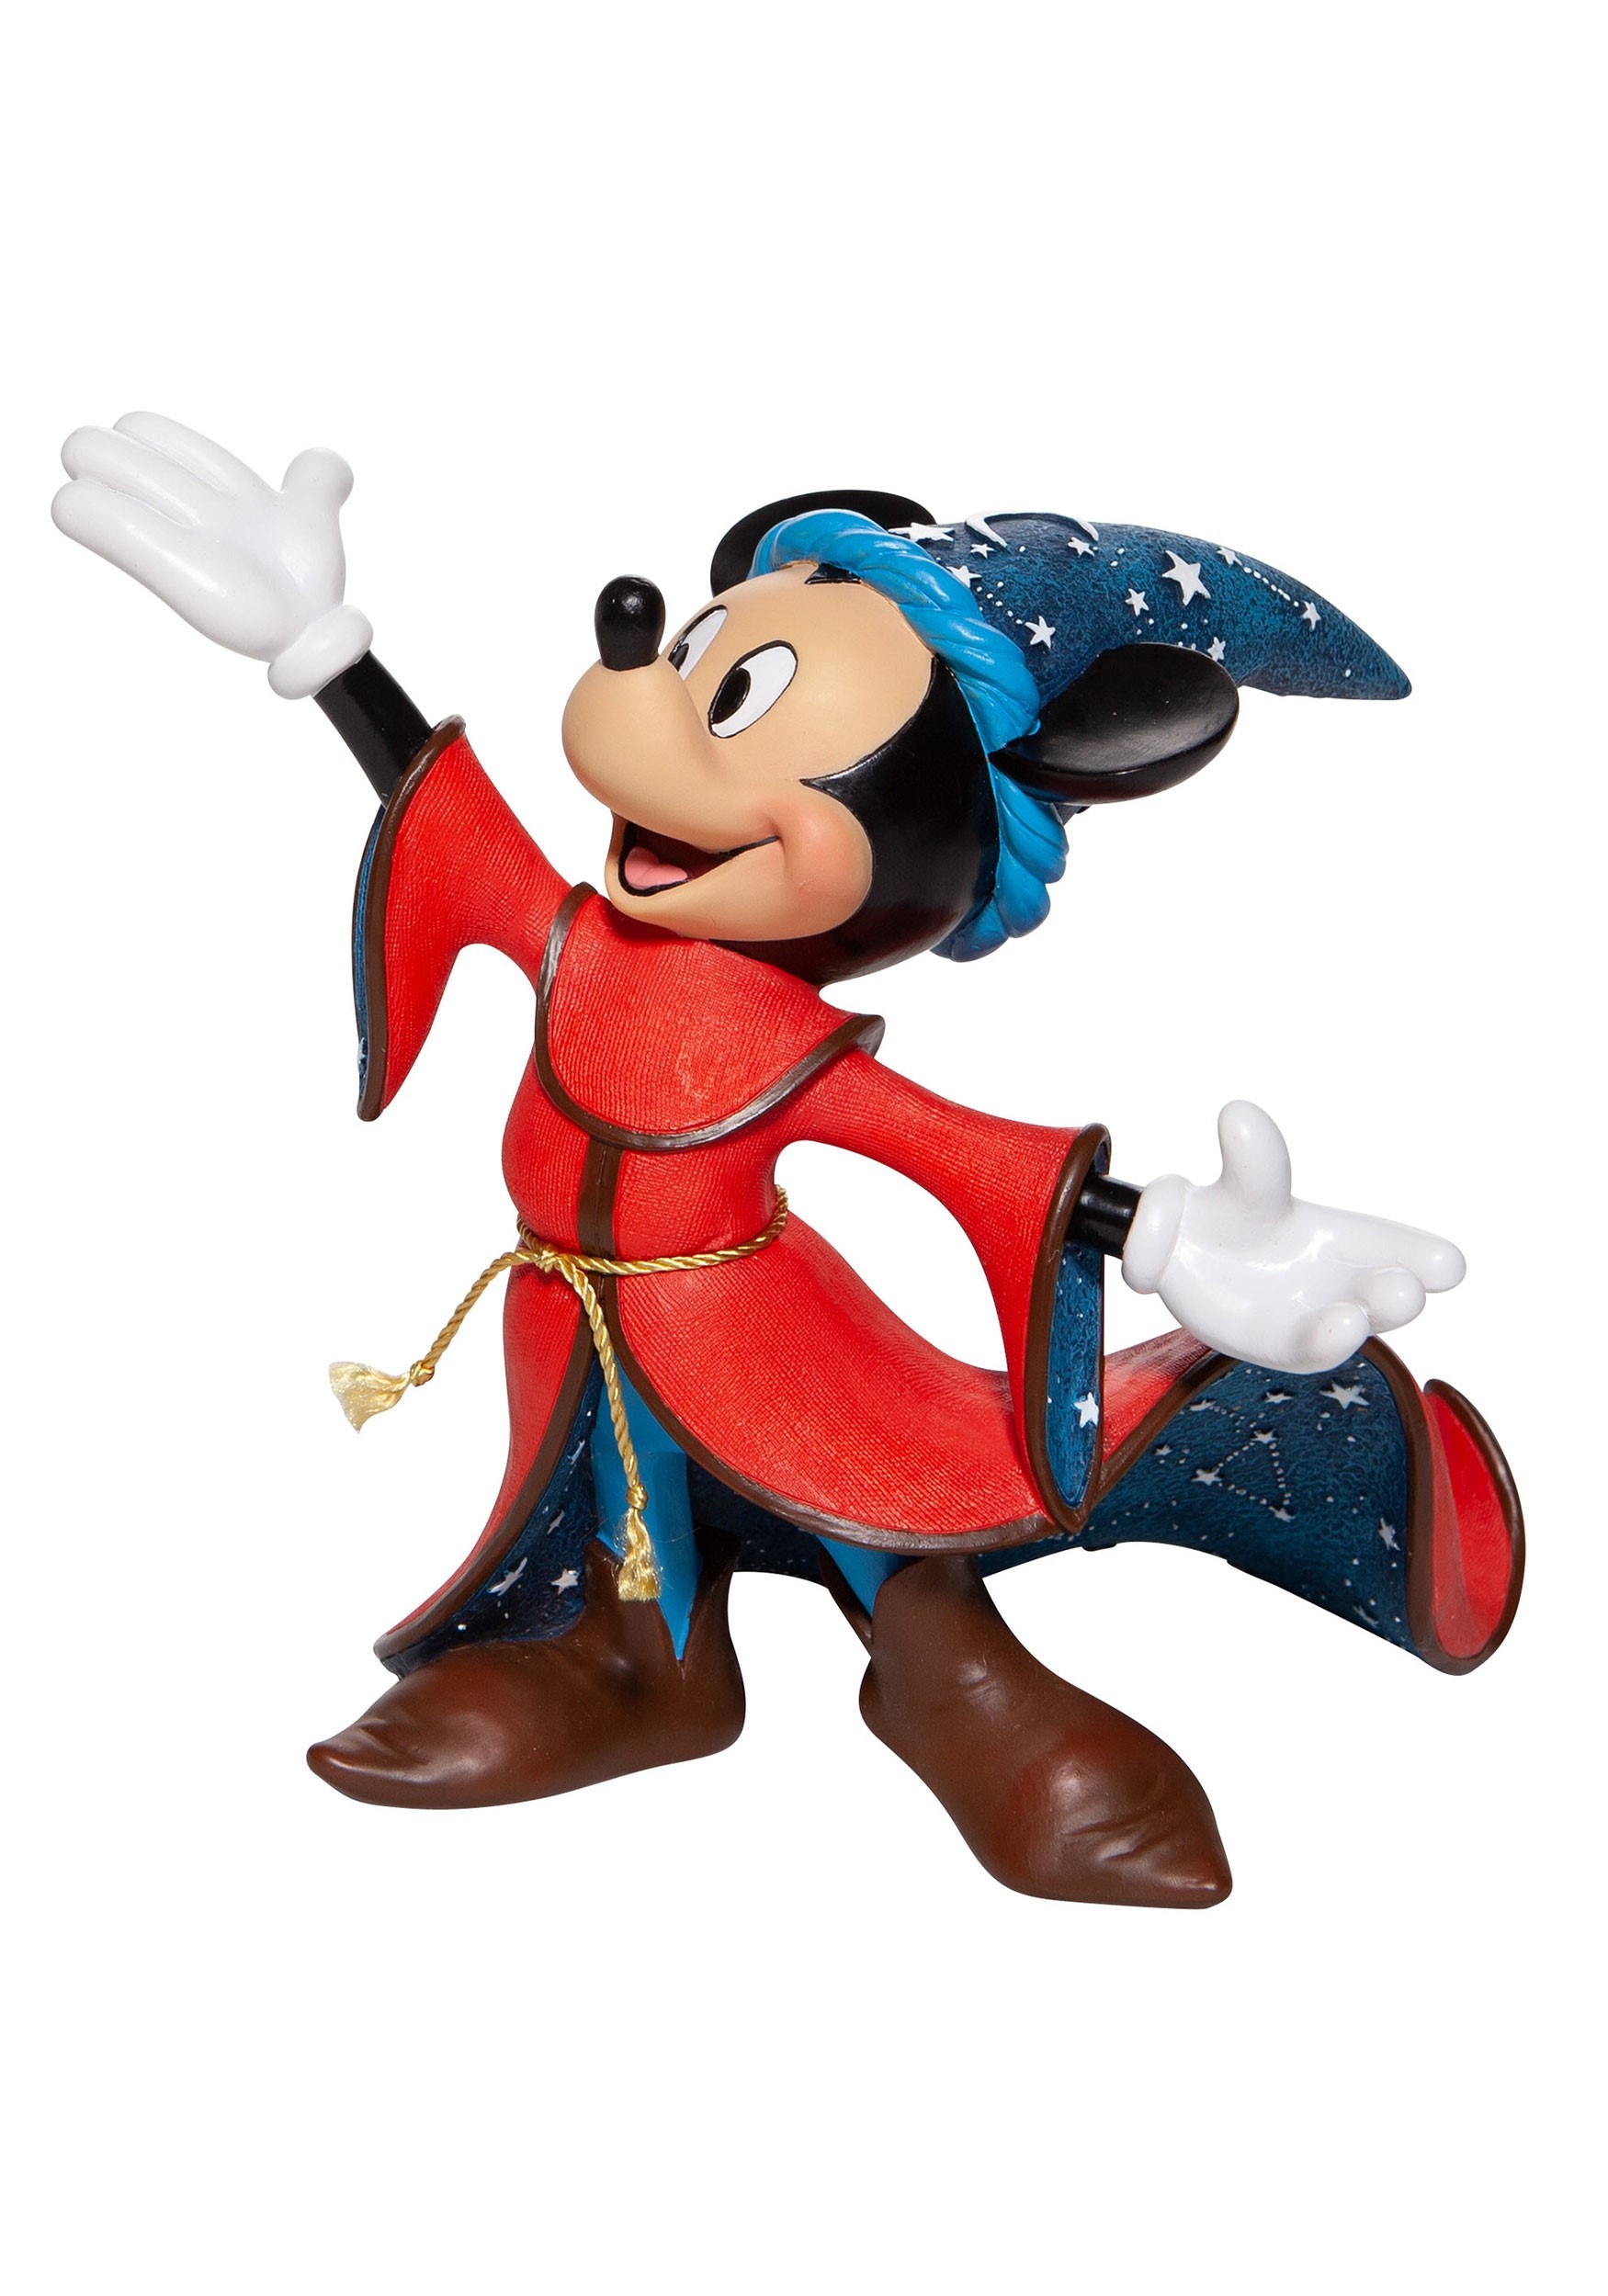 80th Anniversary Disney Sorcerer Mickey Statue